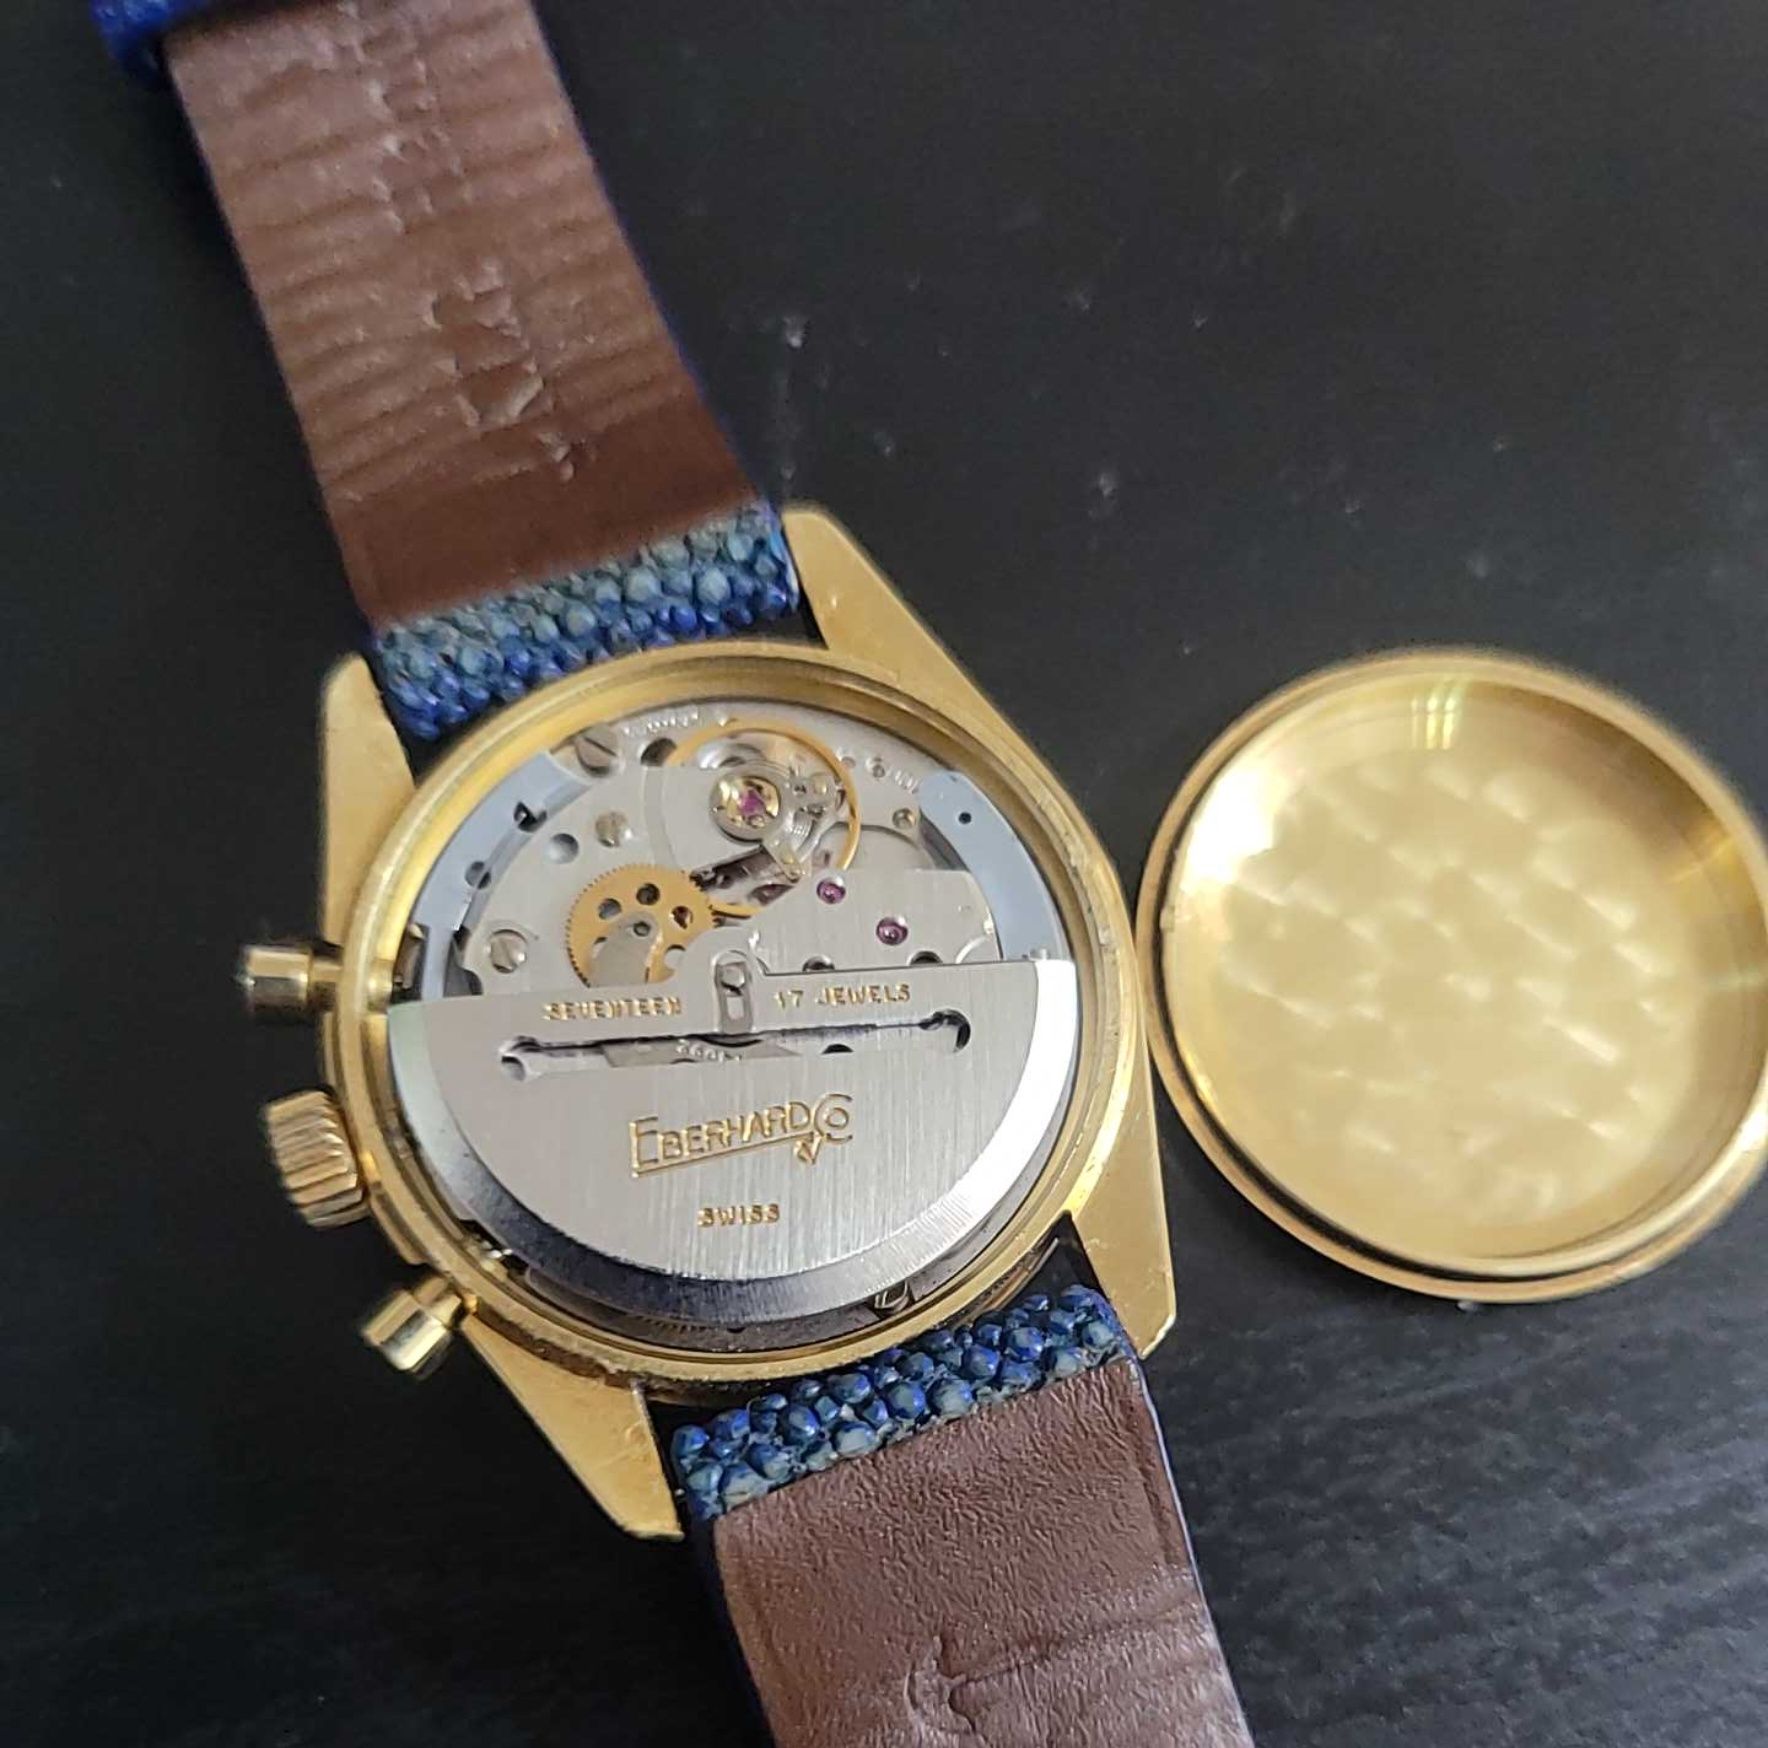 Schimb Eberhard Champion automatic chronograph aur masiv 18k